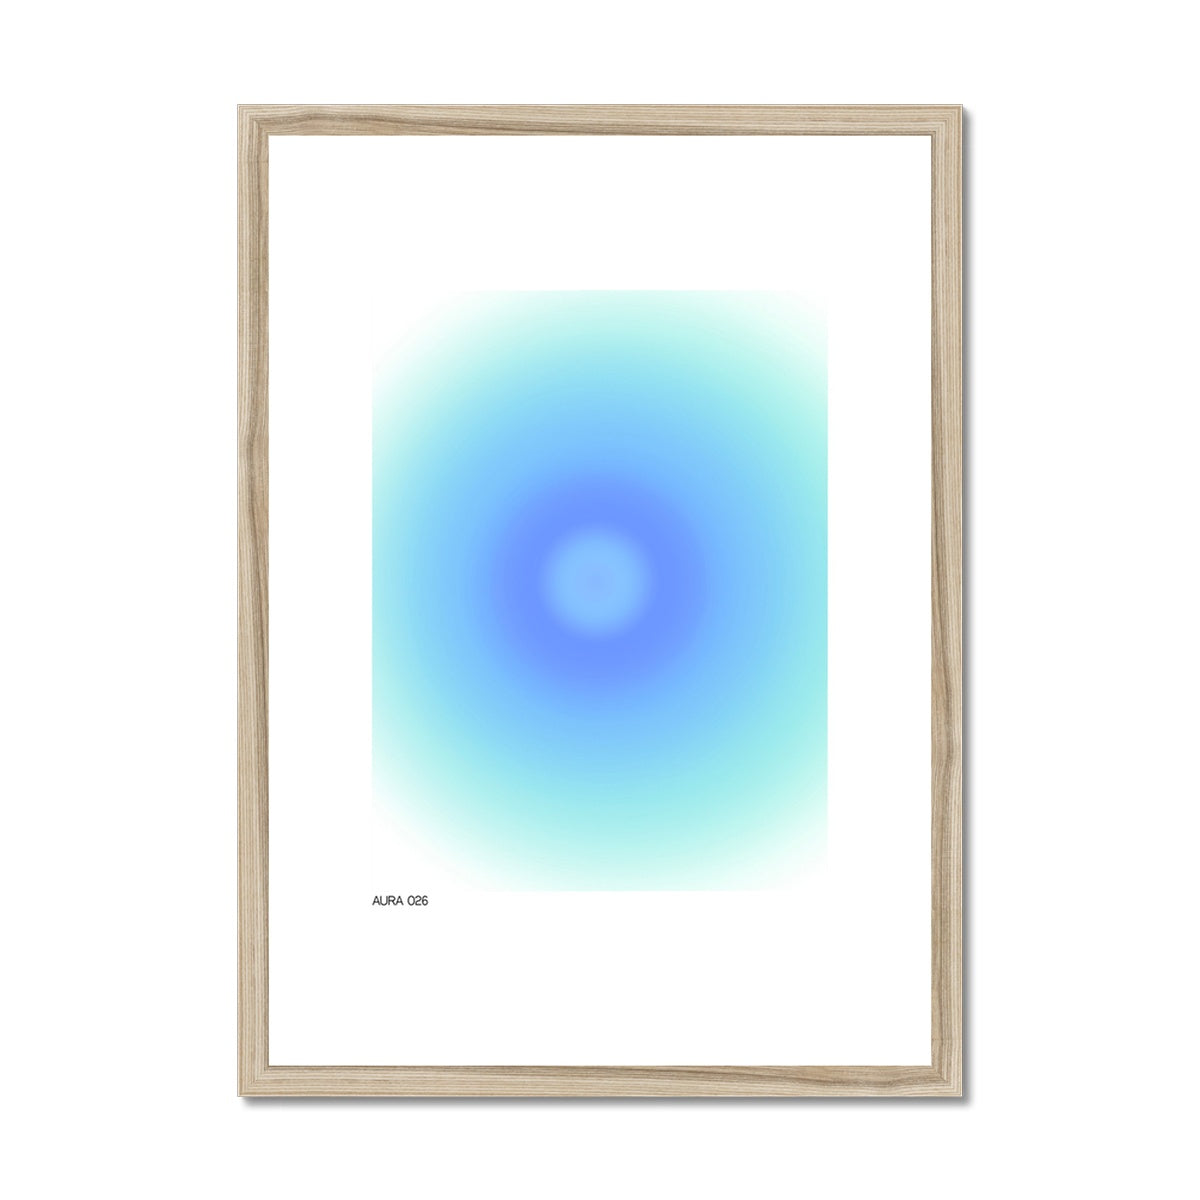 aura 026 Framed & Mounted Print